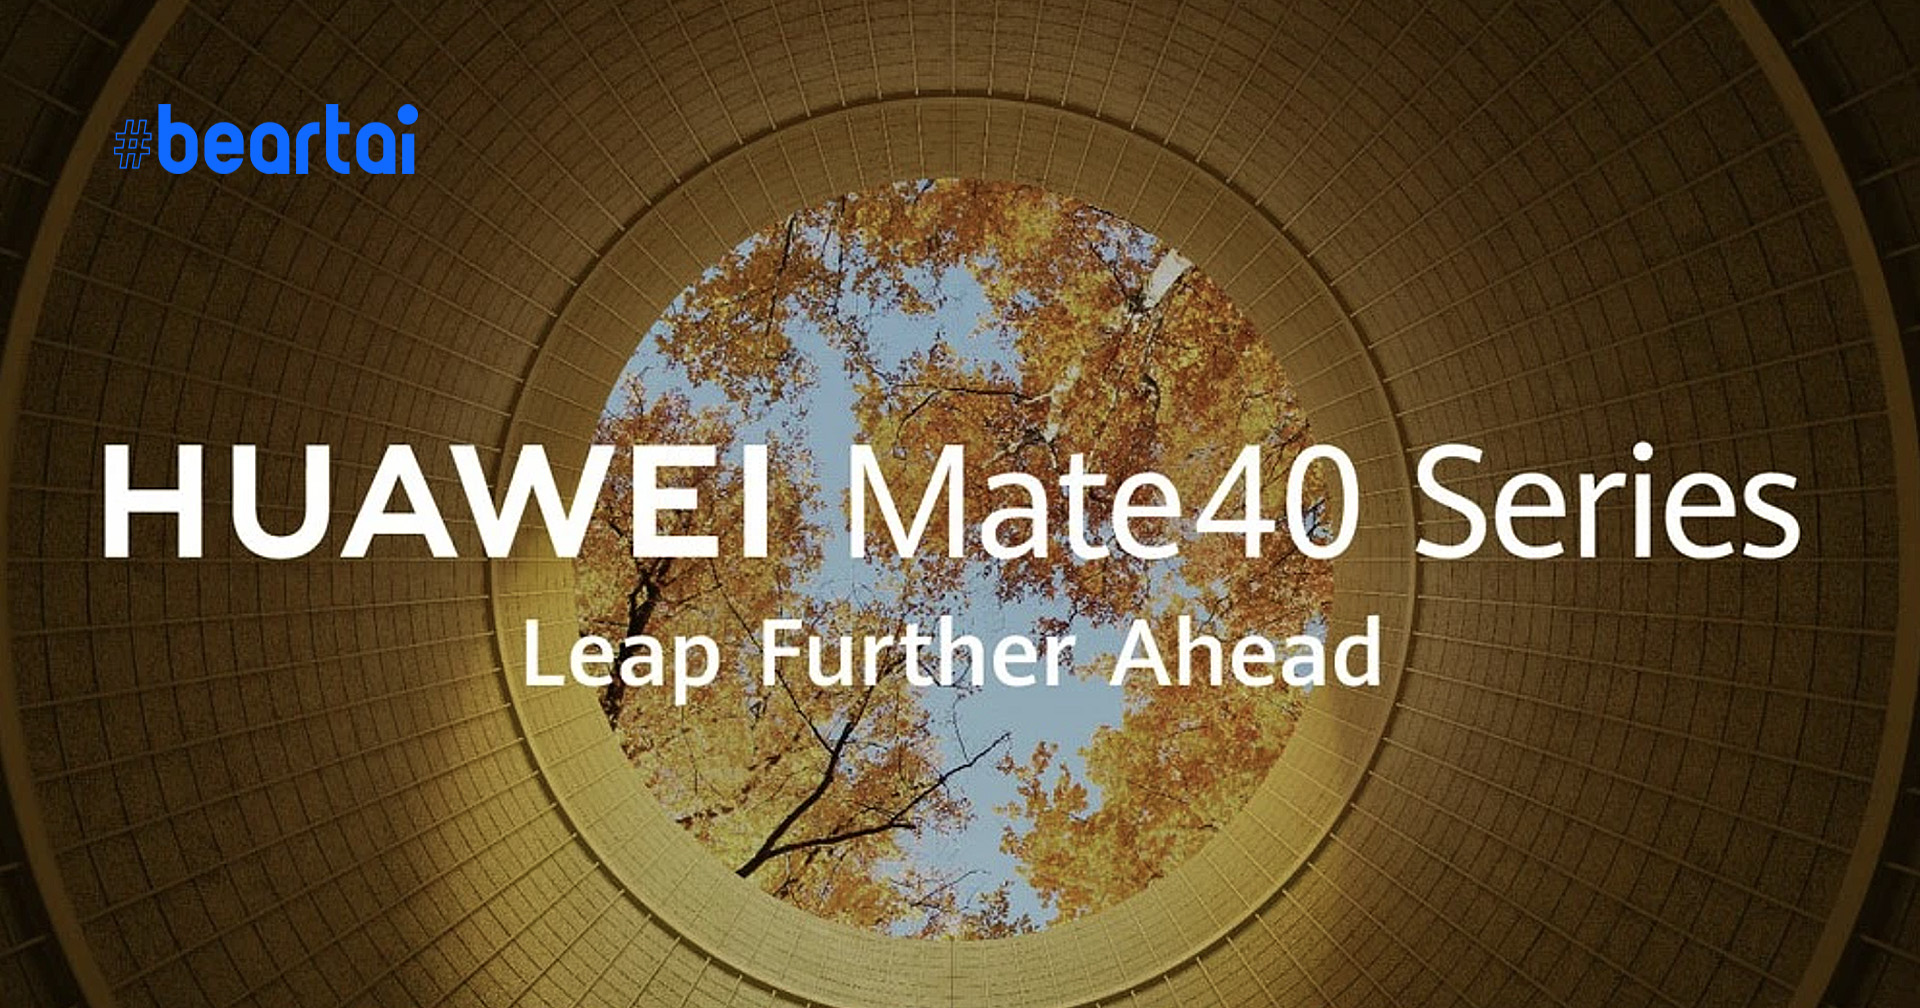 Huawei จะเปิดตัวเรือธง Mate 40 ในวันที่ 22 ตุลาคมนี้ คาดอัดเทคโนโลยีให้พูดถึงอีกนาน